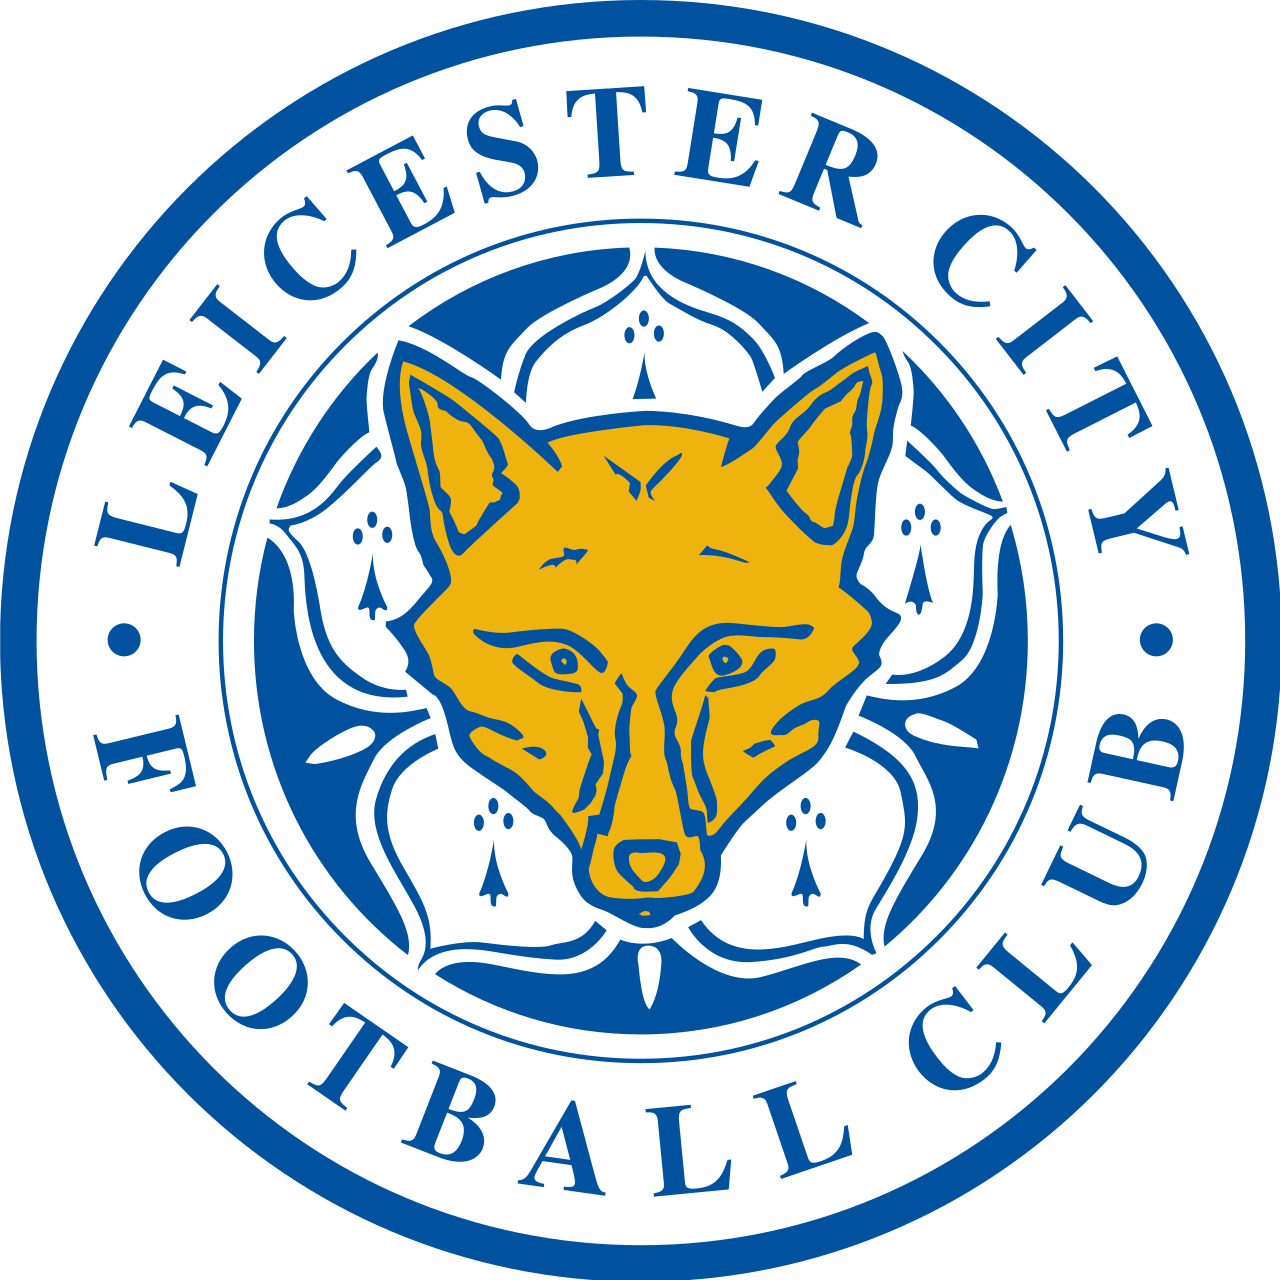 Logo Leicester City F.C.